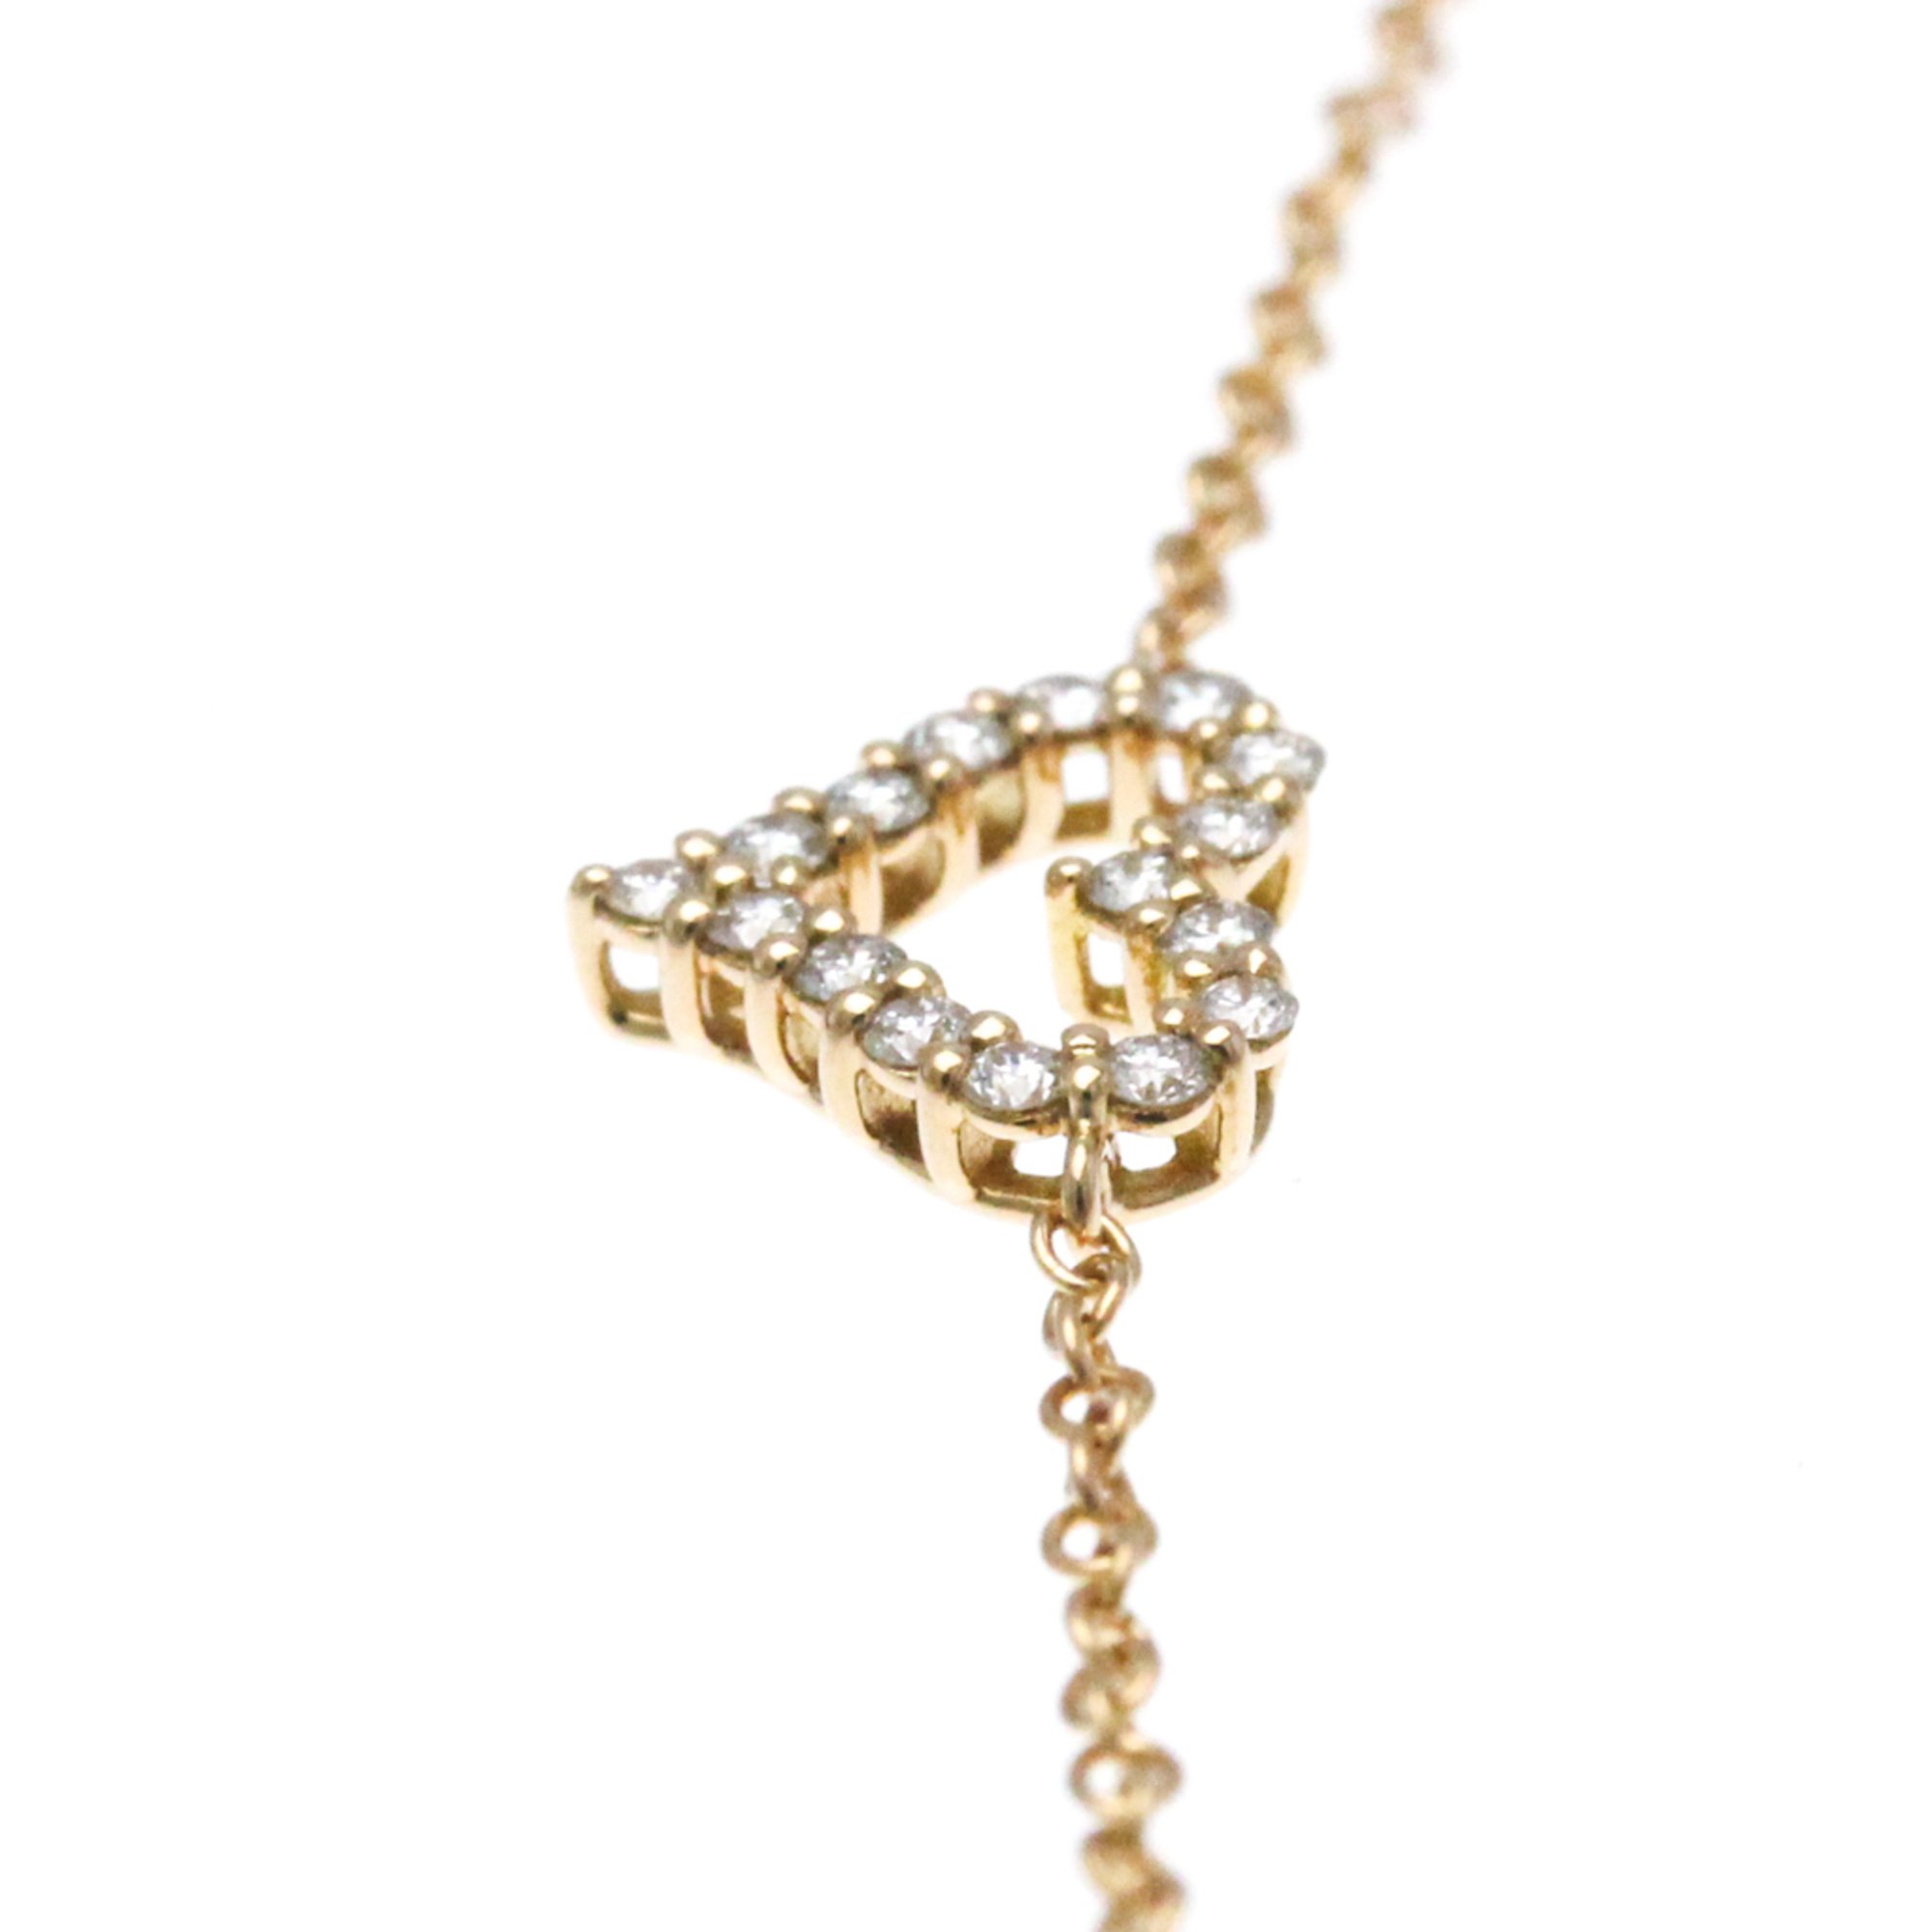 Tiffany Sentimental Heart Diamond Extra Mini Bracelet Pink Gold (18K) Diamond Charm Bracelet Pink Gold